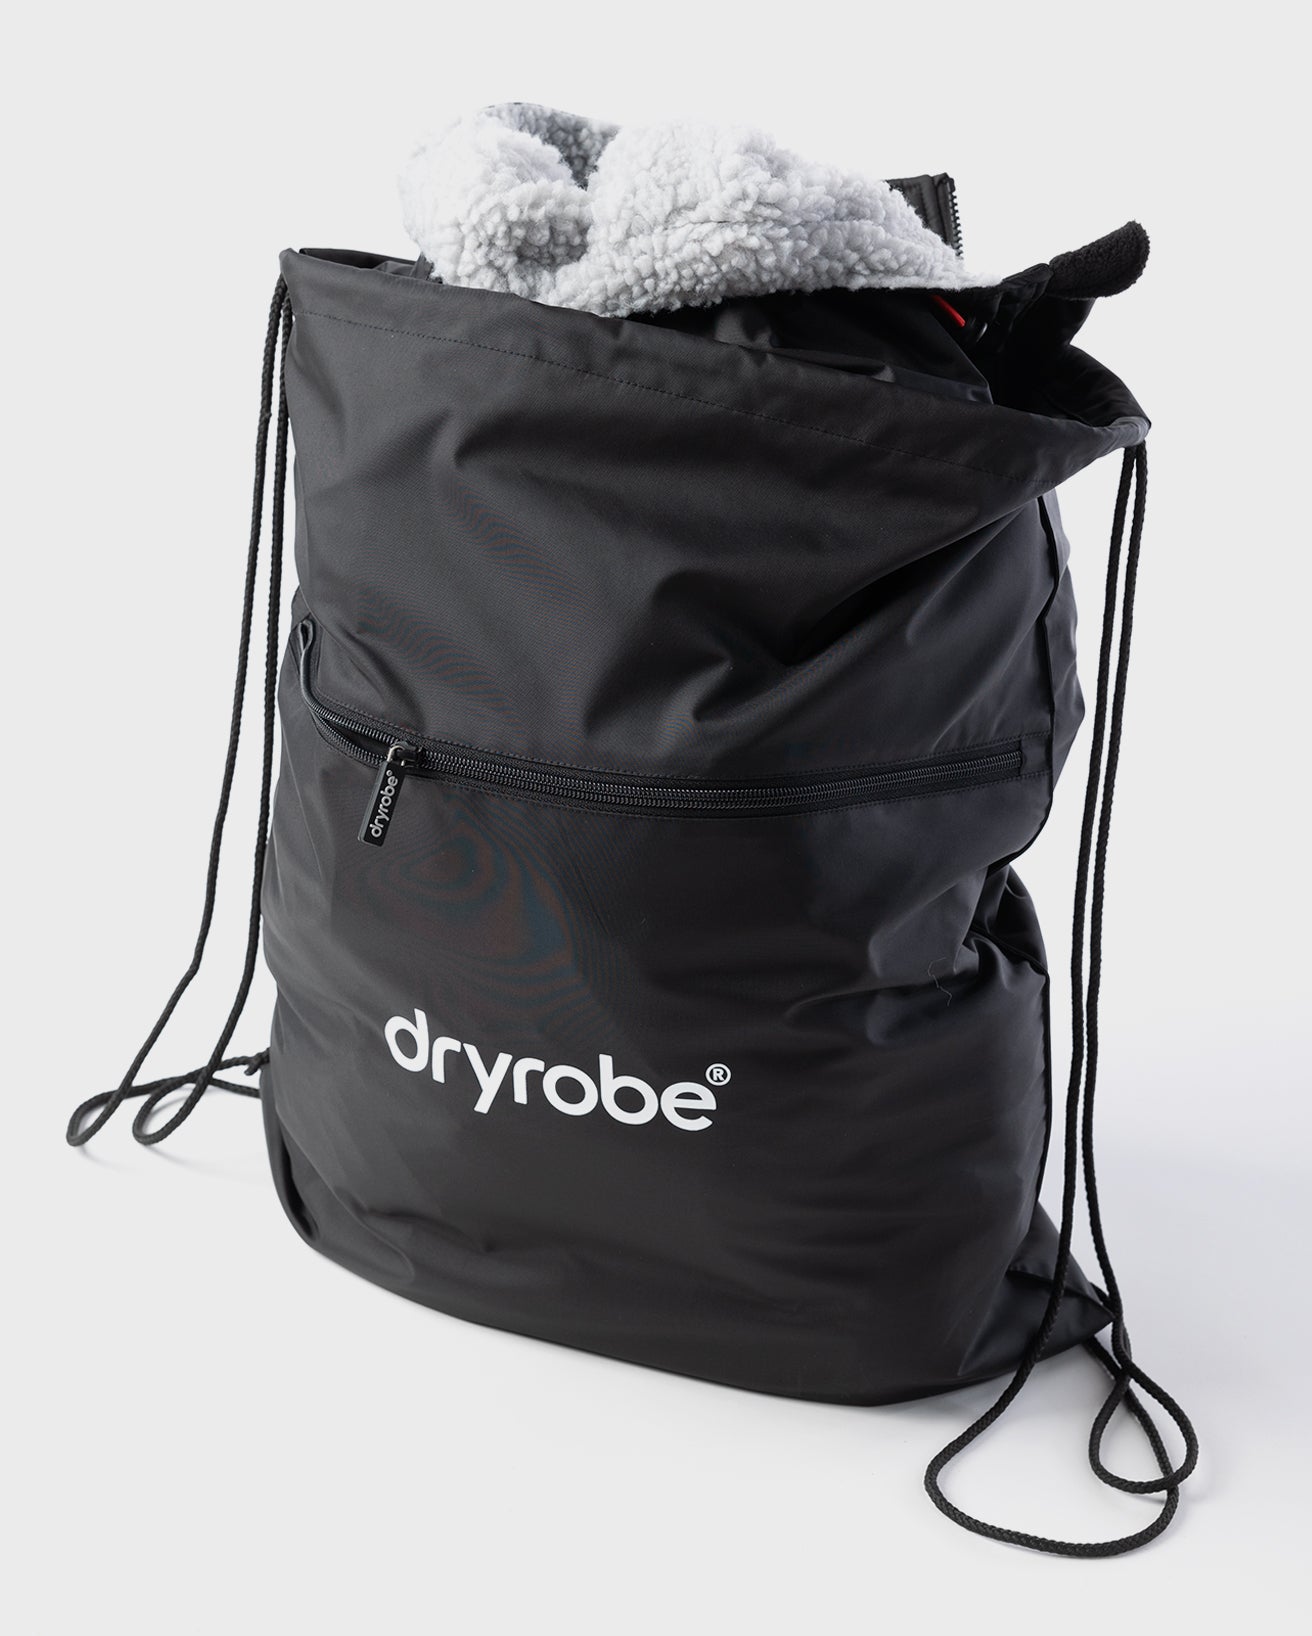 dryrobe® Adapt in bag